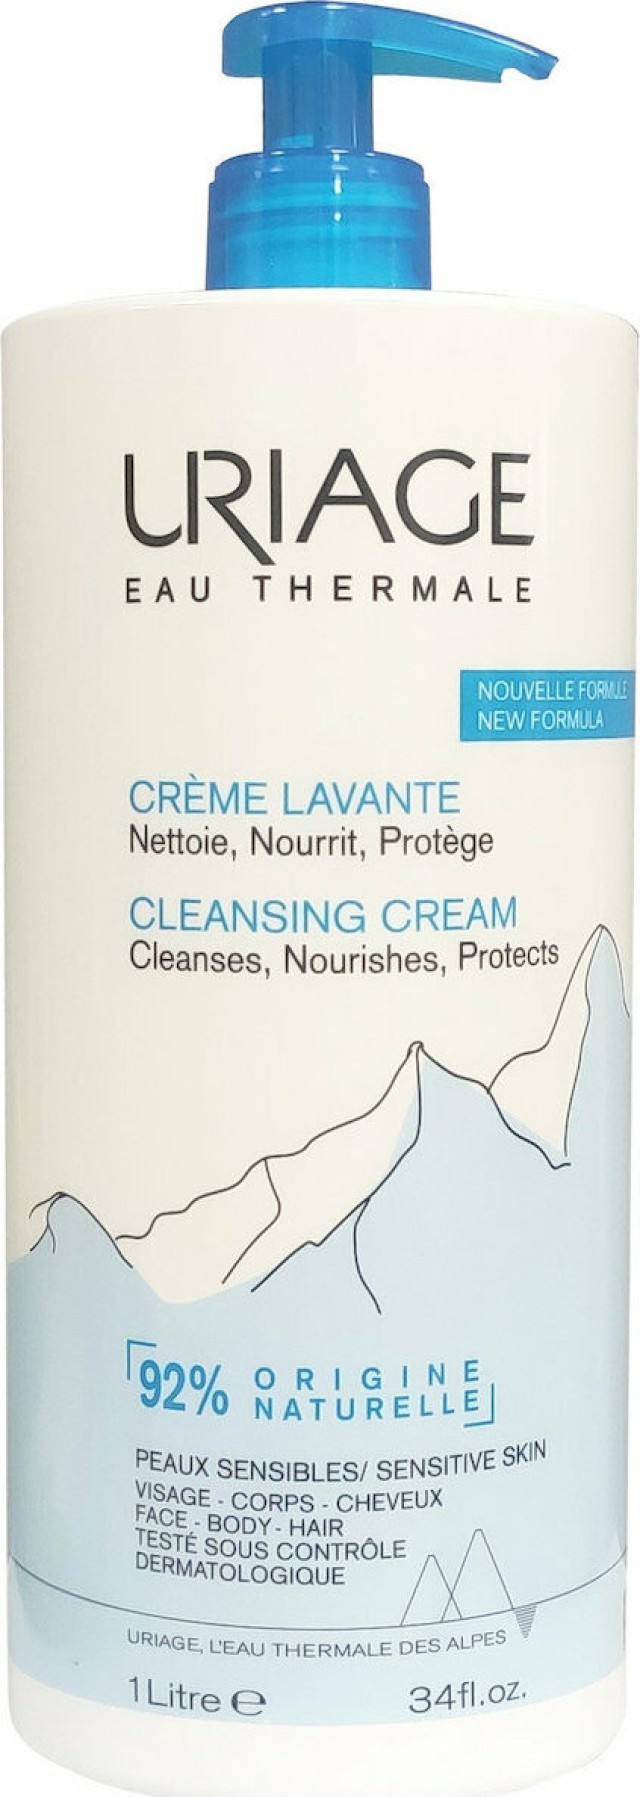 Uriage Eau Thermale Cleansing Cream Κρέμα Καθαρισμού 1lt -20%